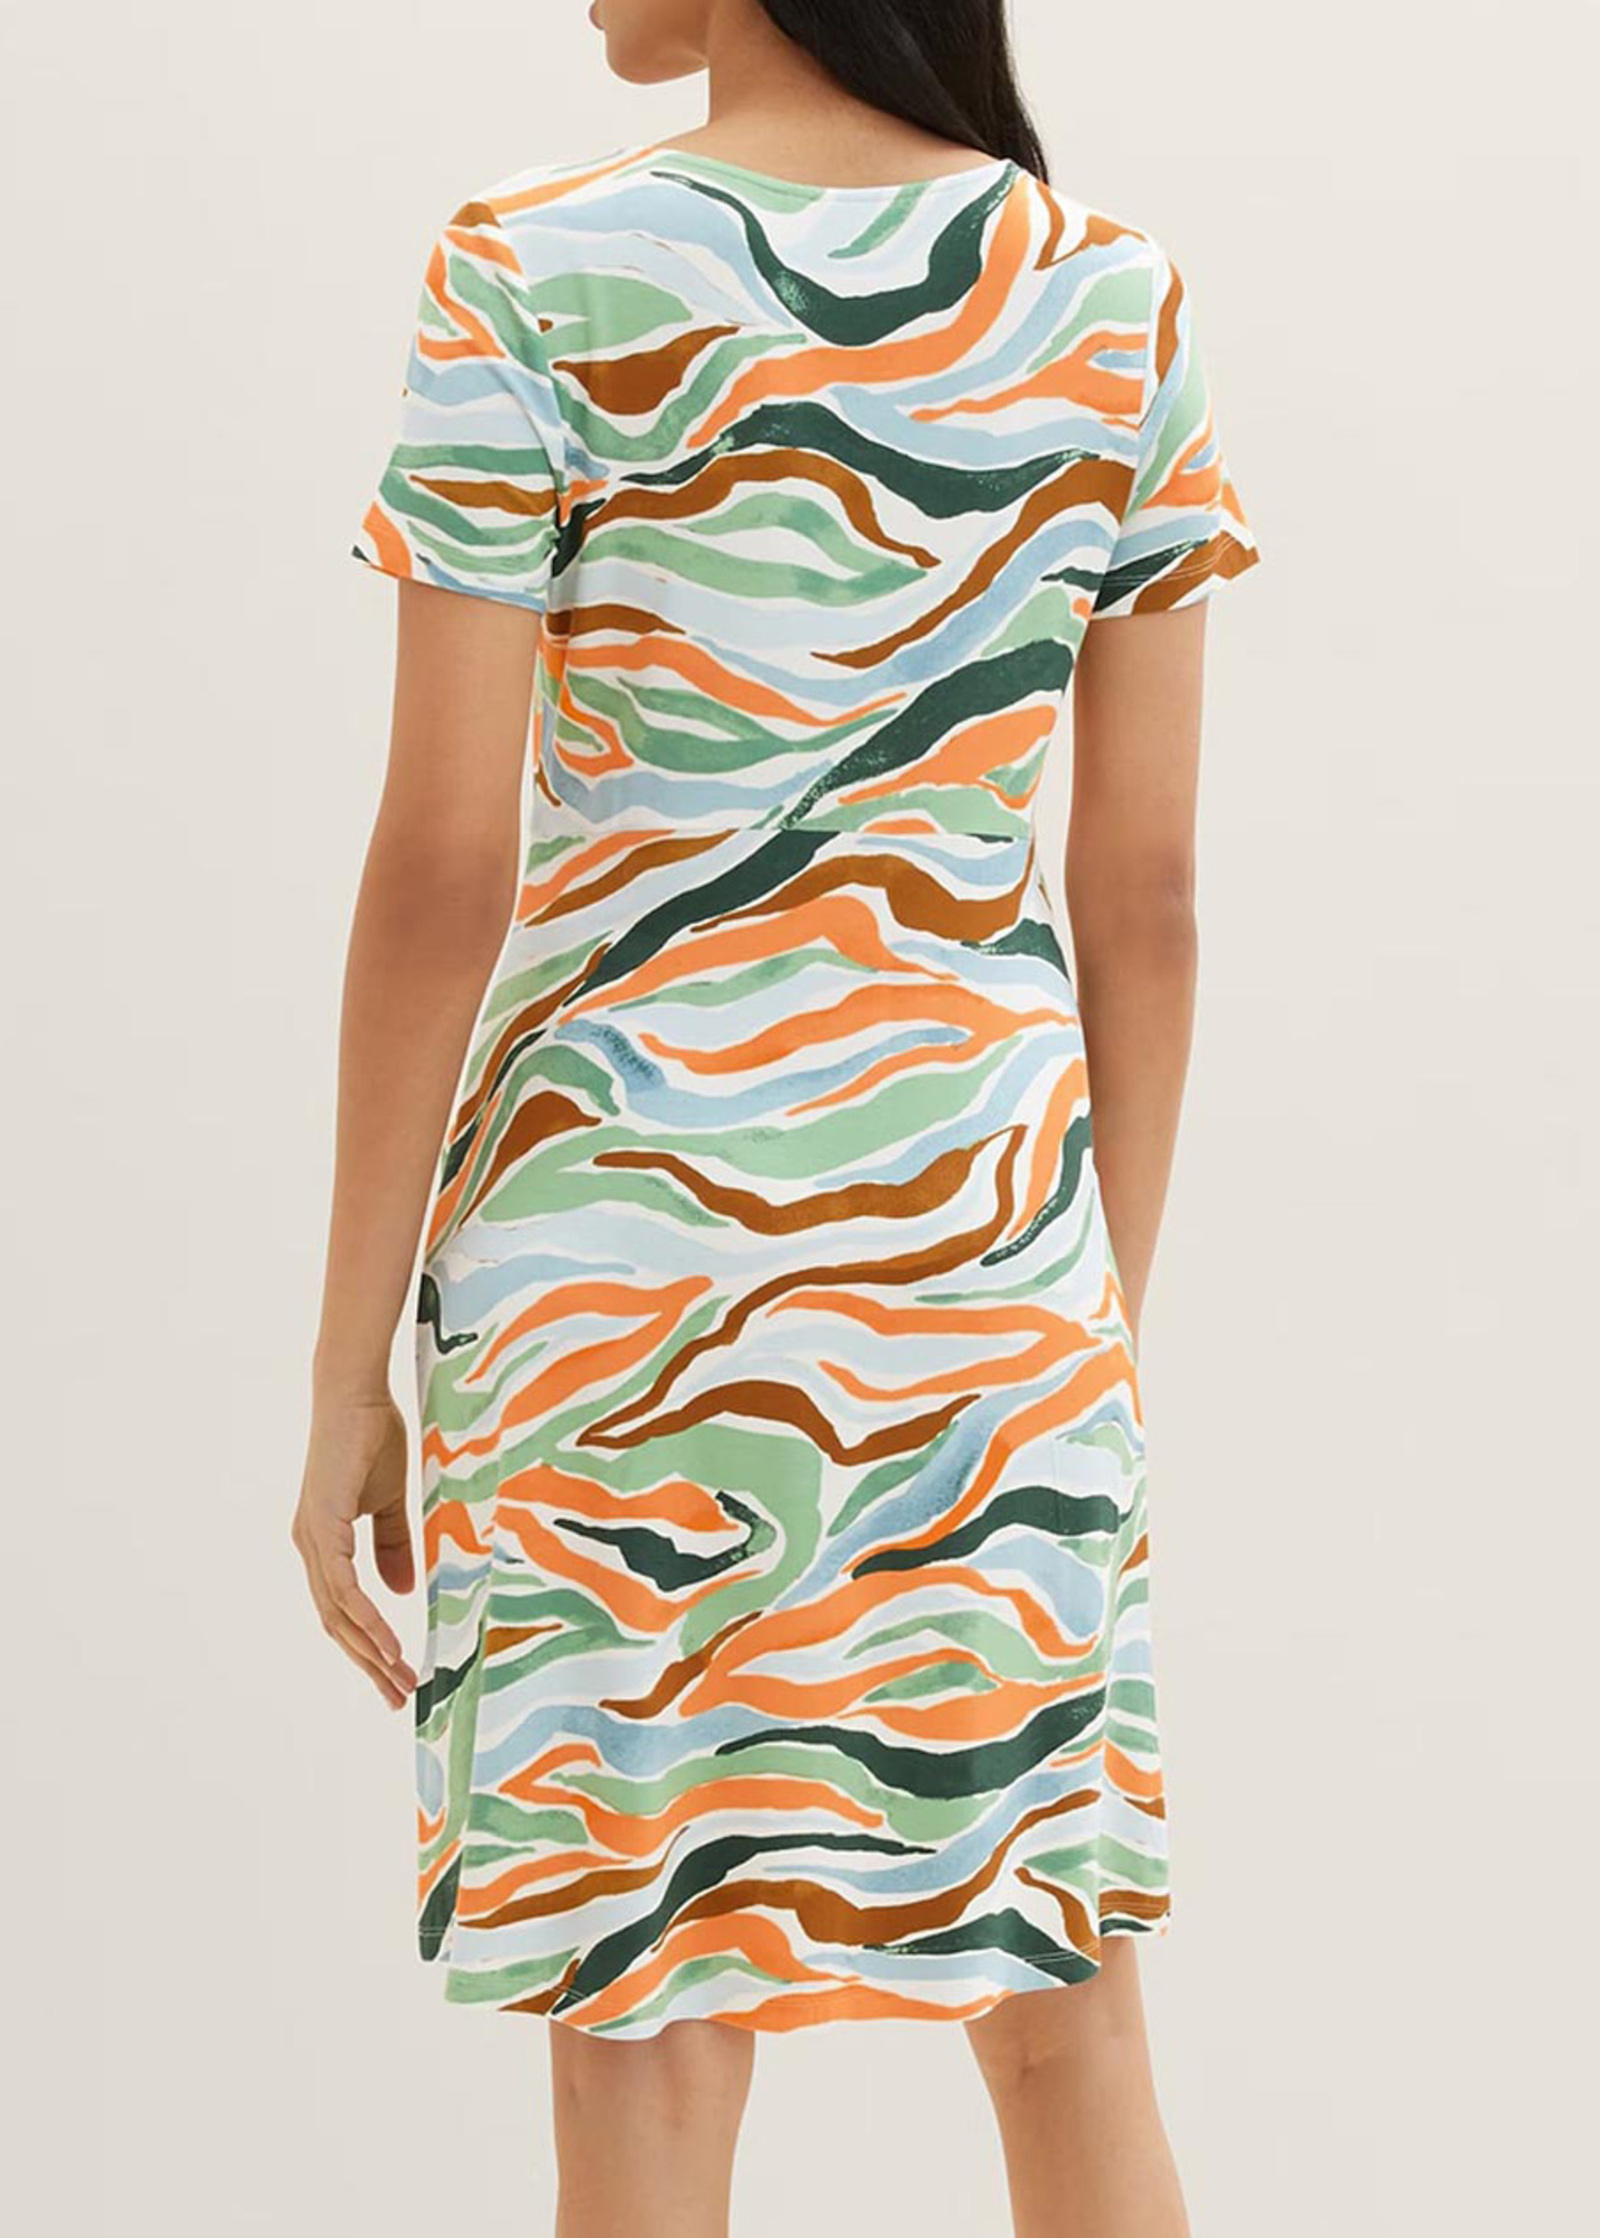 Tom Tailor® Dress - Colorful Wavy Design Rozmiar 38